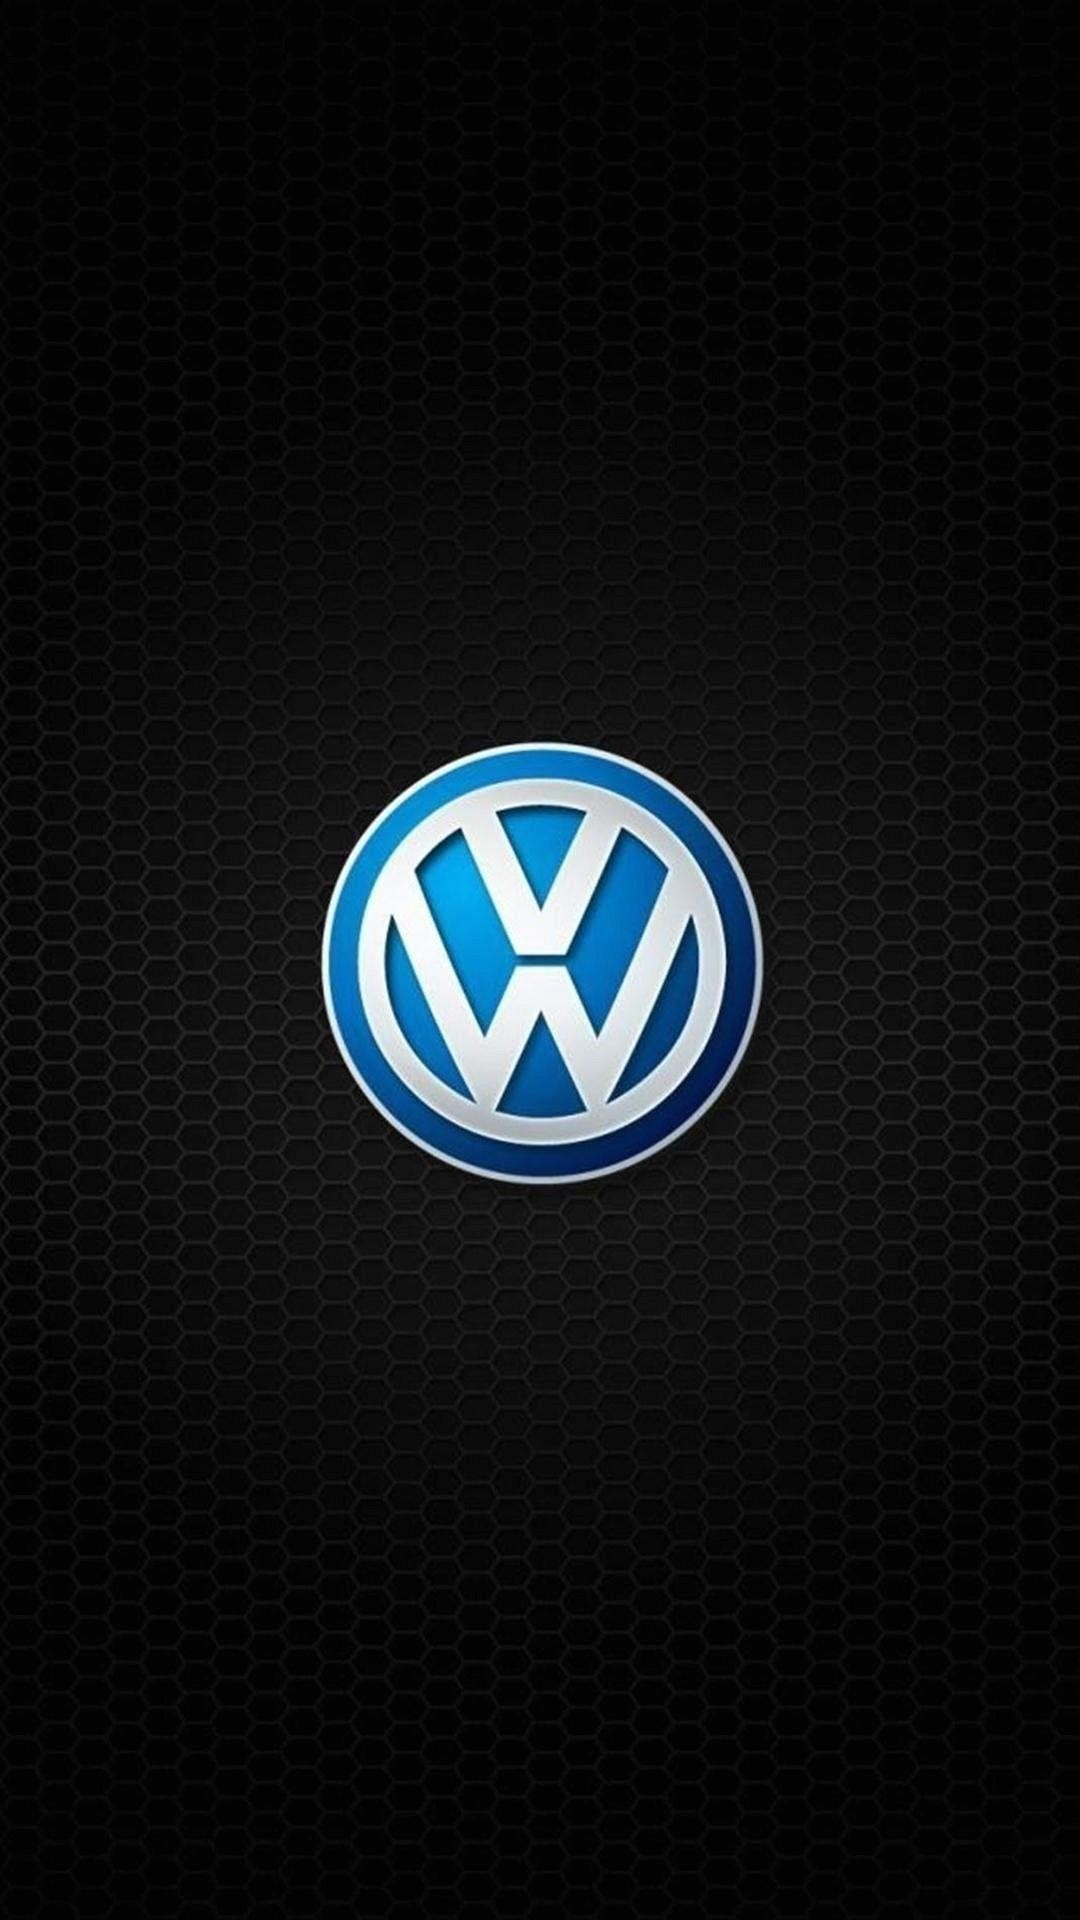 1080x1920 Wallpaper Full Hd 1080 X 1920 Smartphone Volkswagen Logo Symbol .